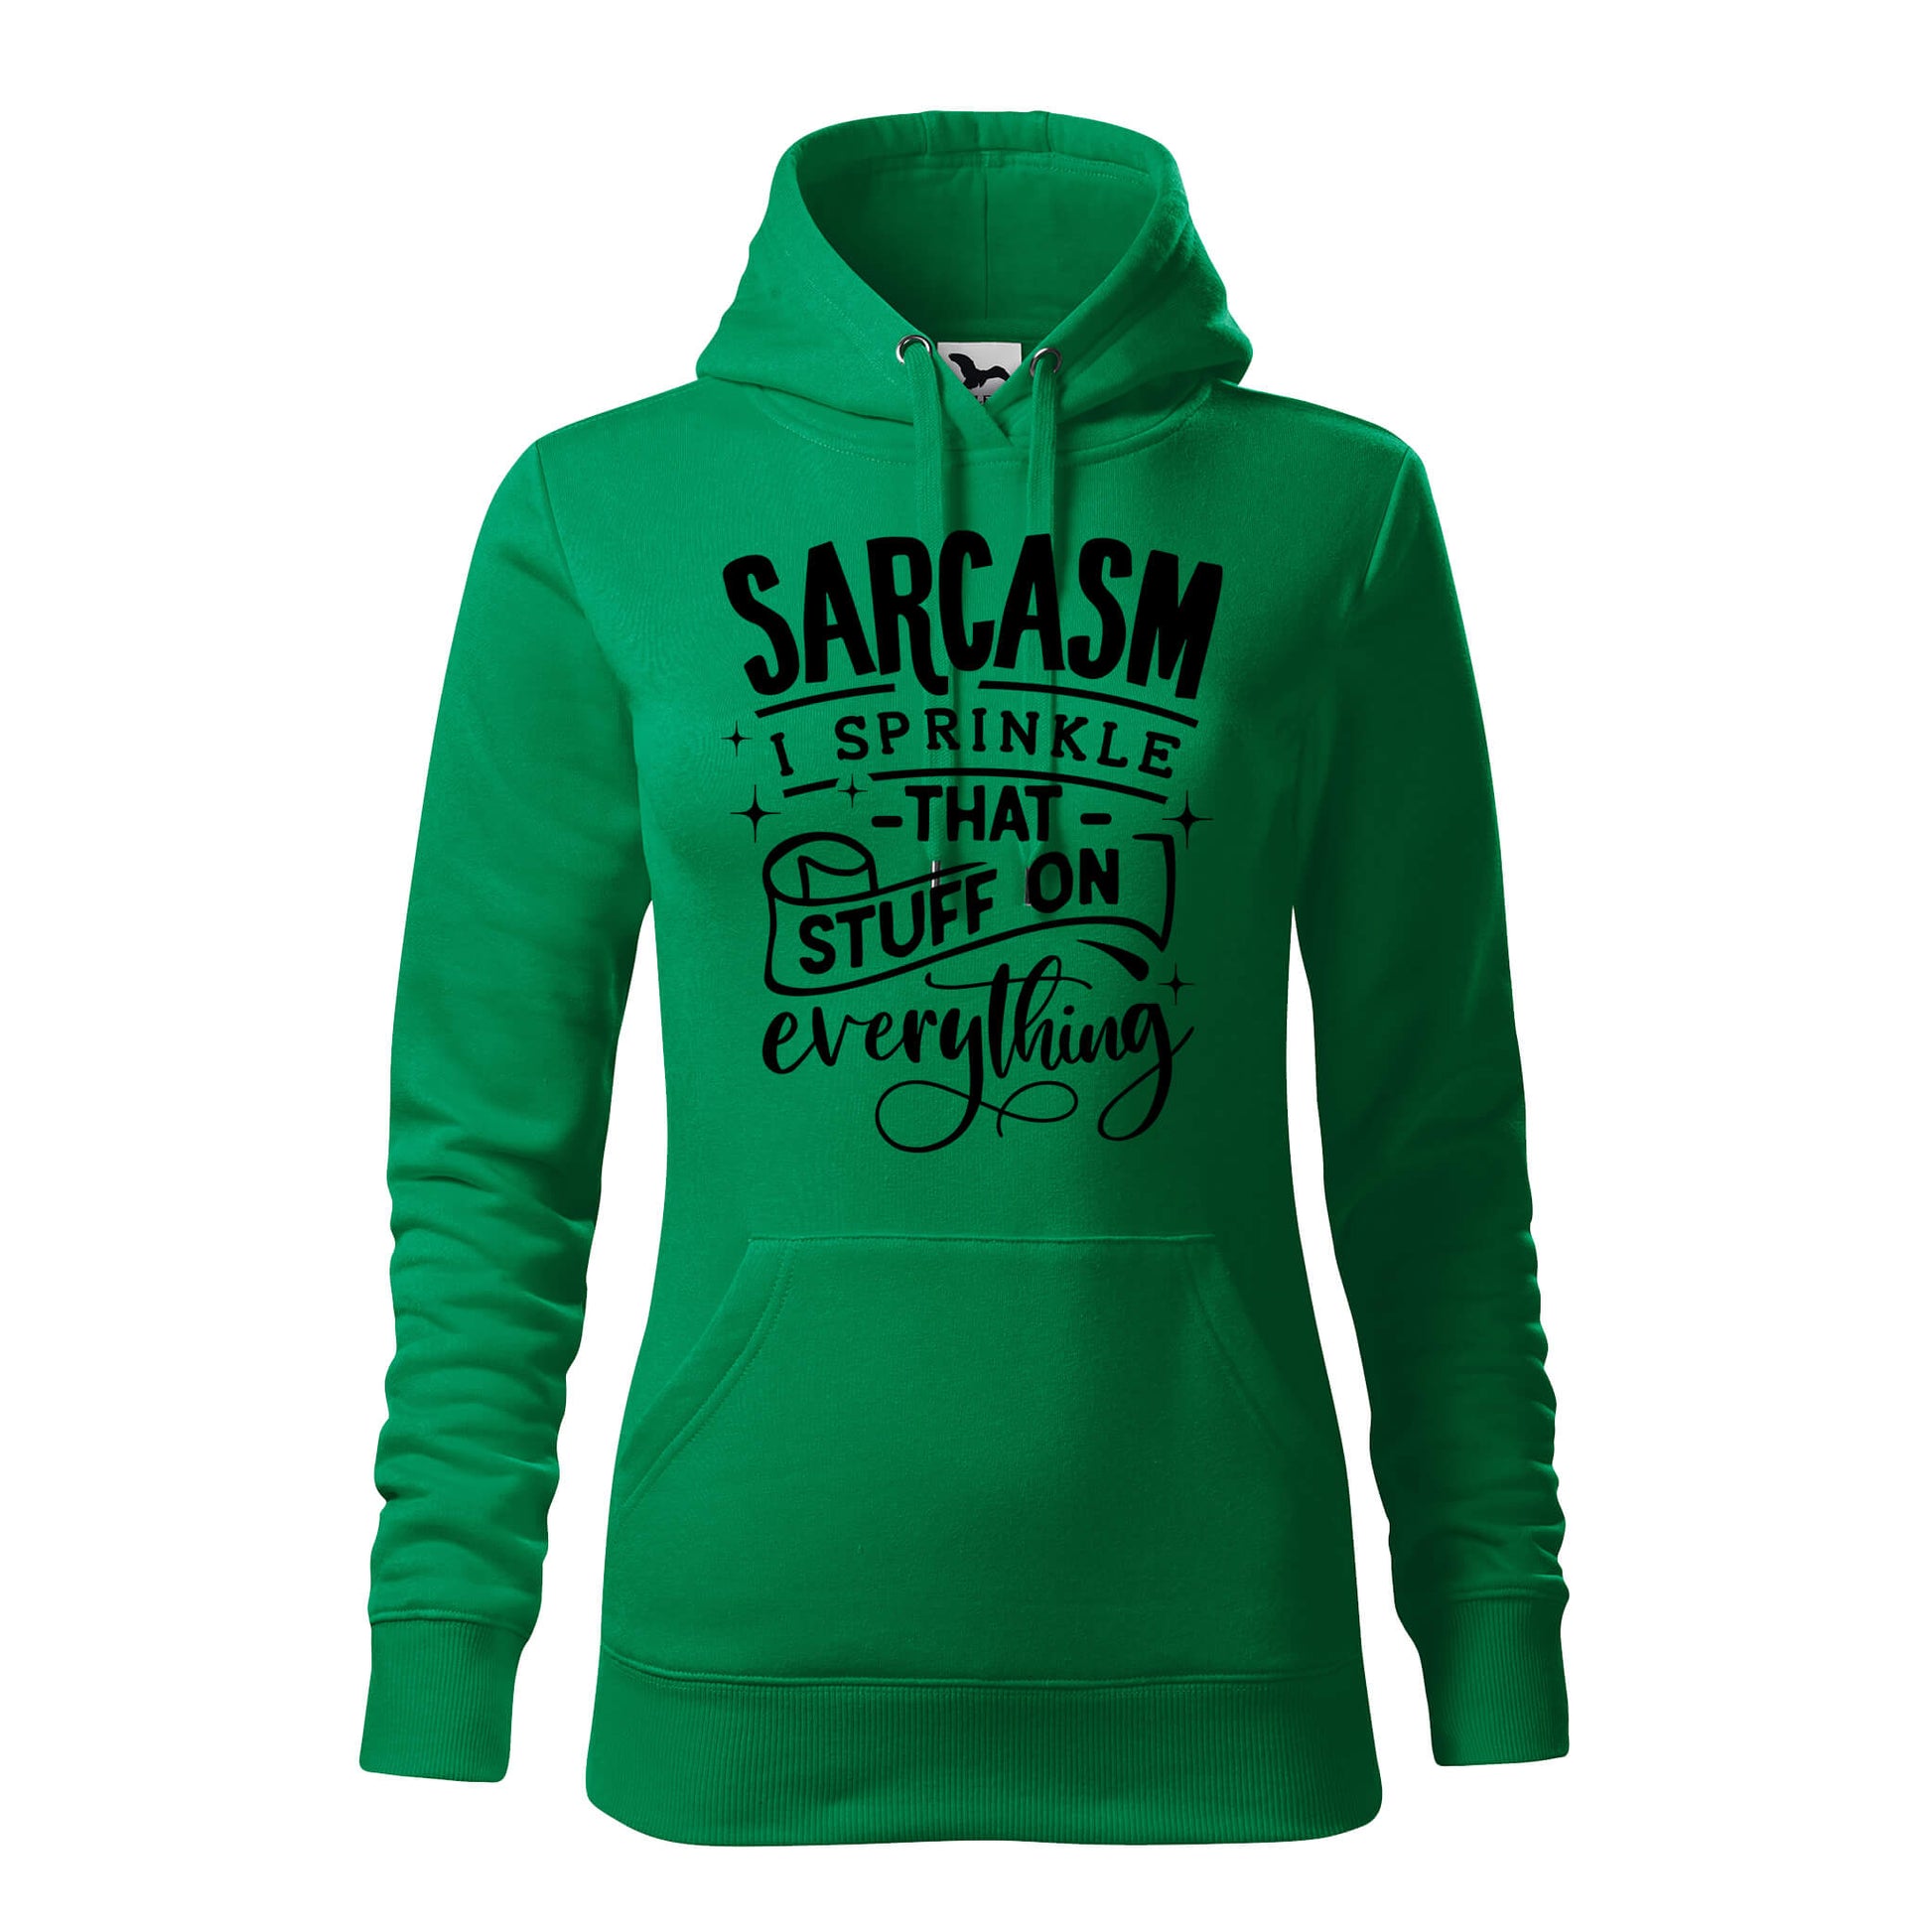 Sarcasm i sprinkle hoodie - rvdesignprint